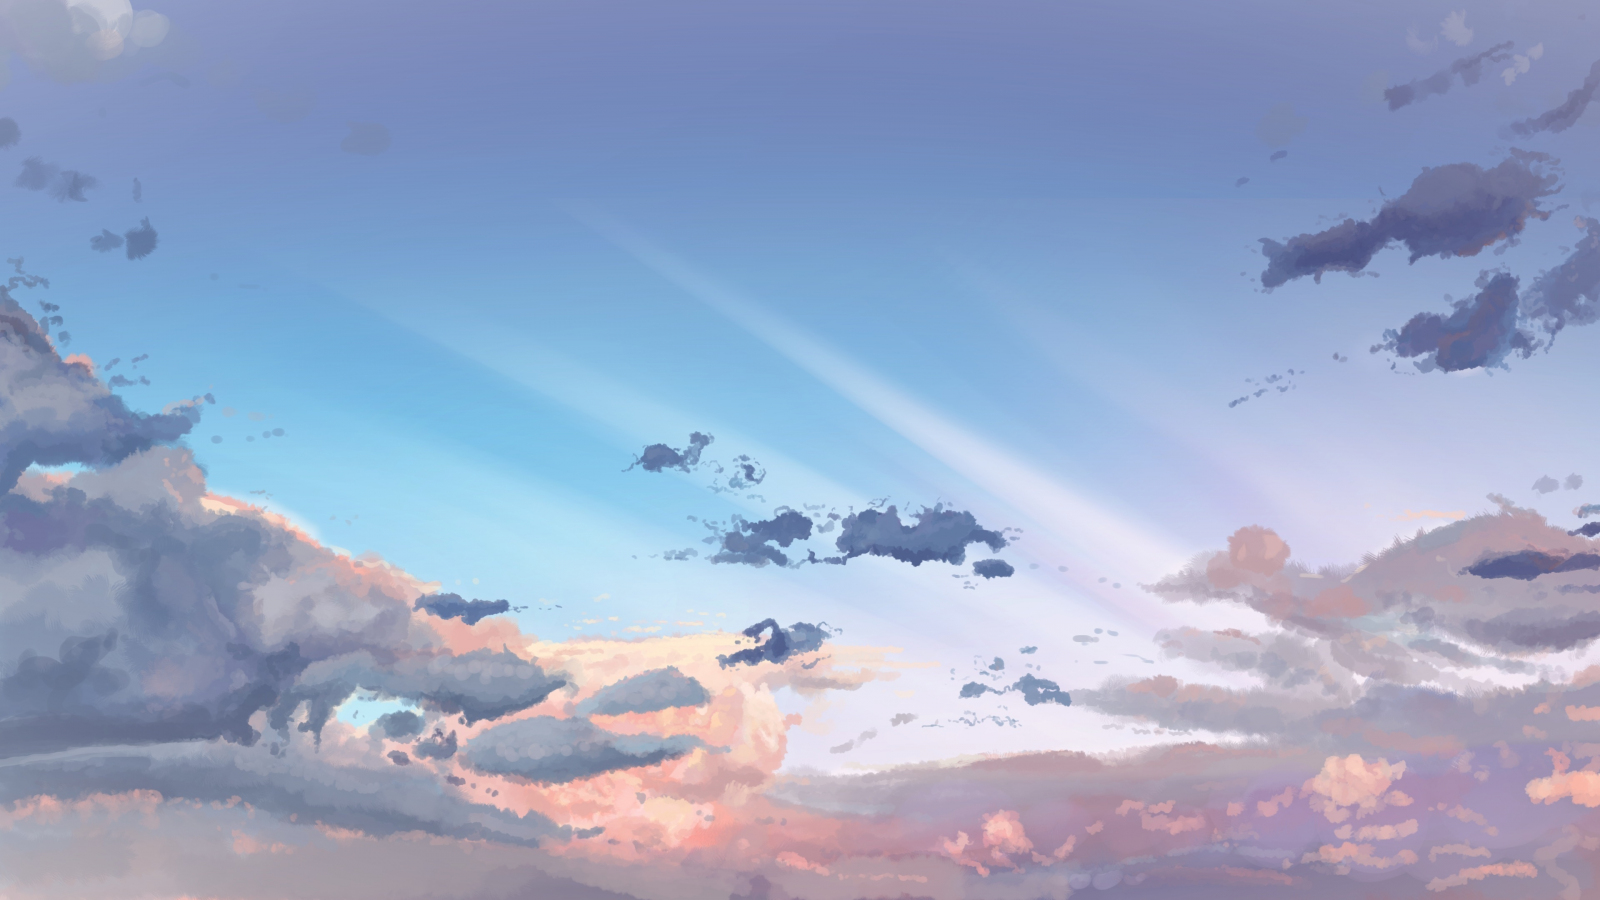 Download wallpaper 1600x900 sky, clouds, original, anime, 16:9 widescreen  1600x900 hd background, 4501